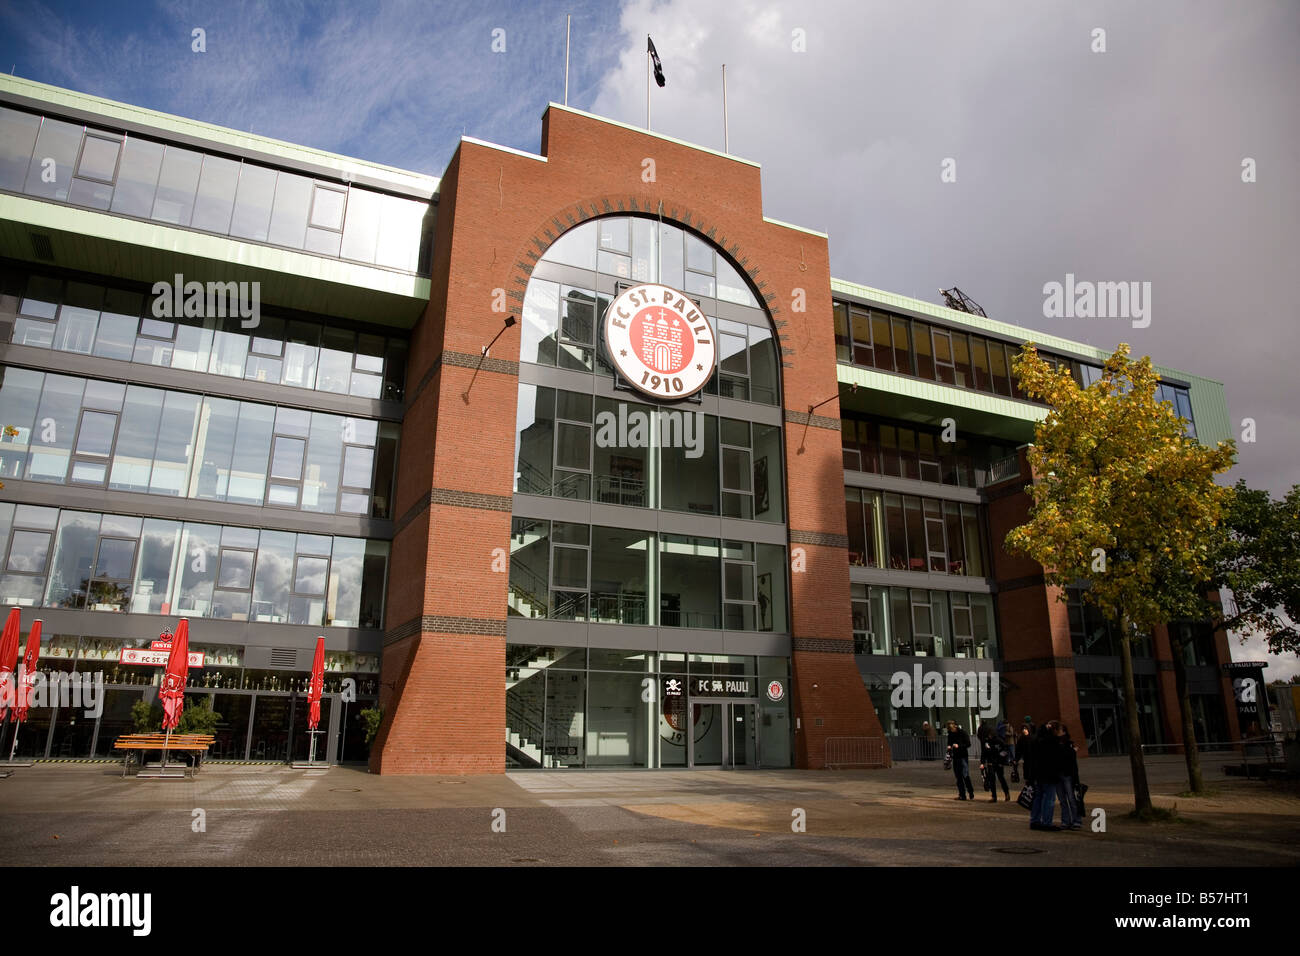 The Millentor Stadium in Hamburg. The ground is the home of FC St Pauli. Stock Photo